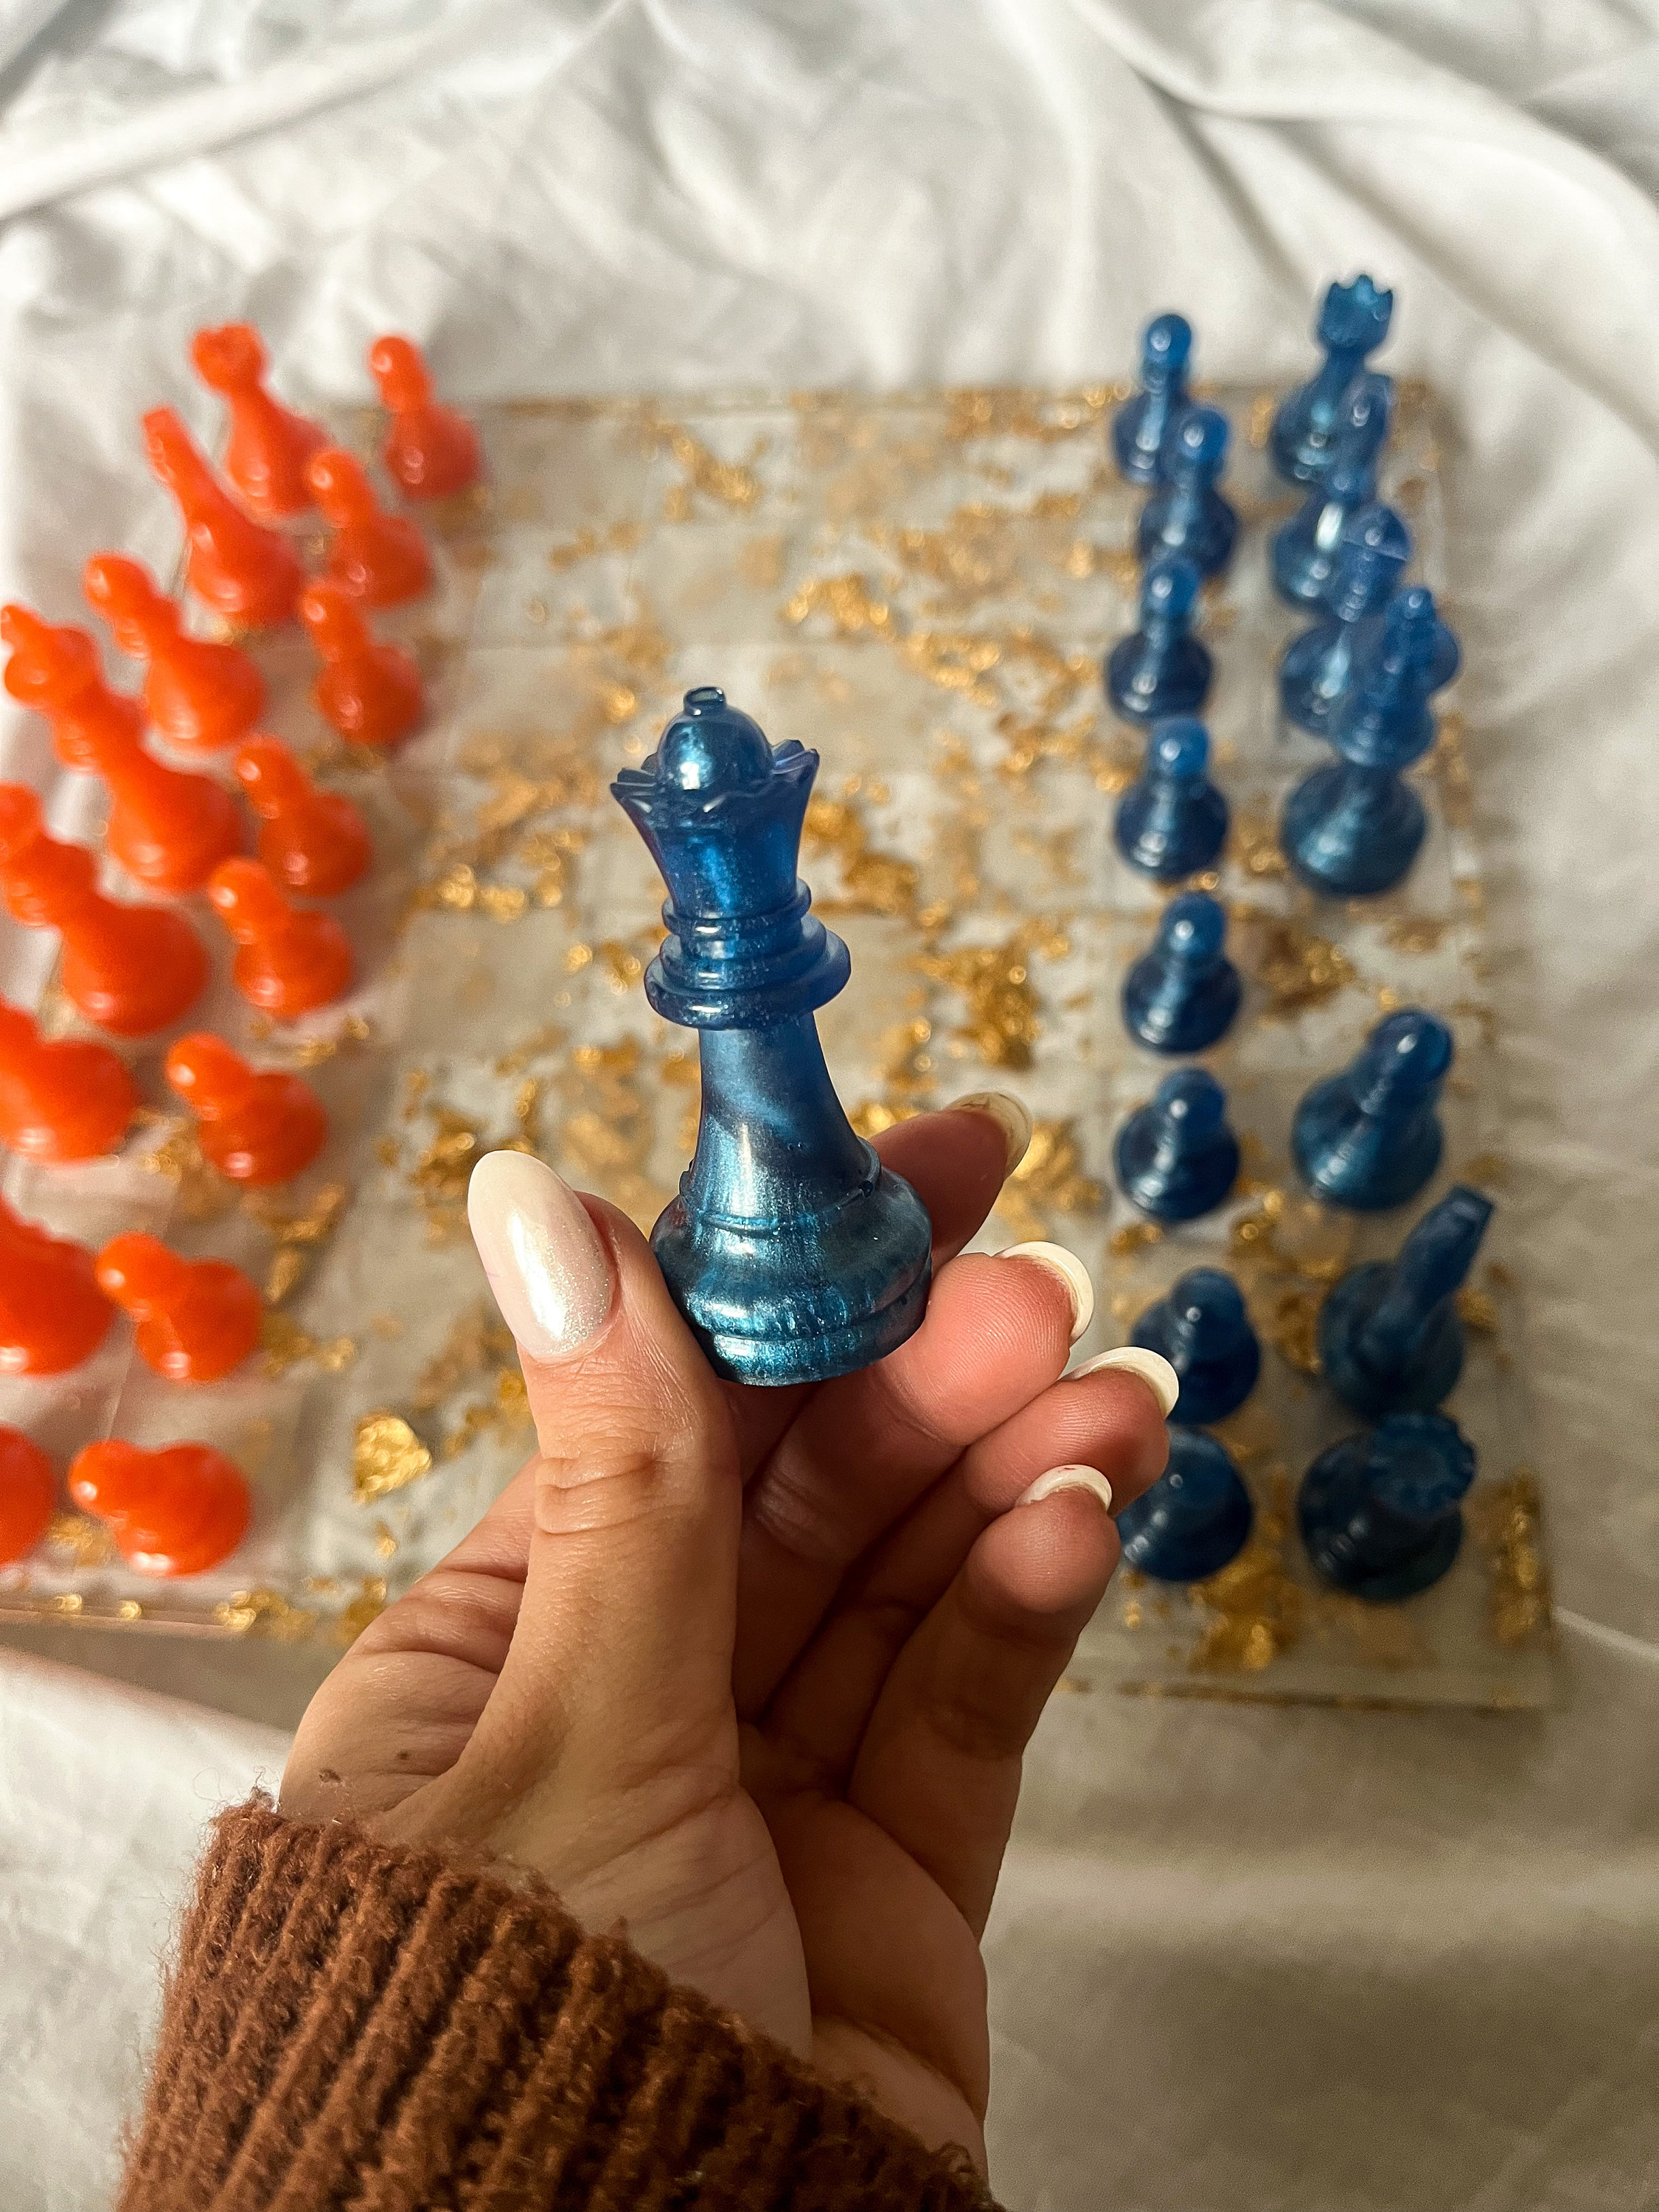 Bohemian Crystal Preciosa Chess Set Gold 